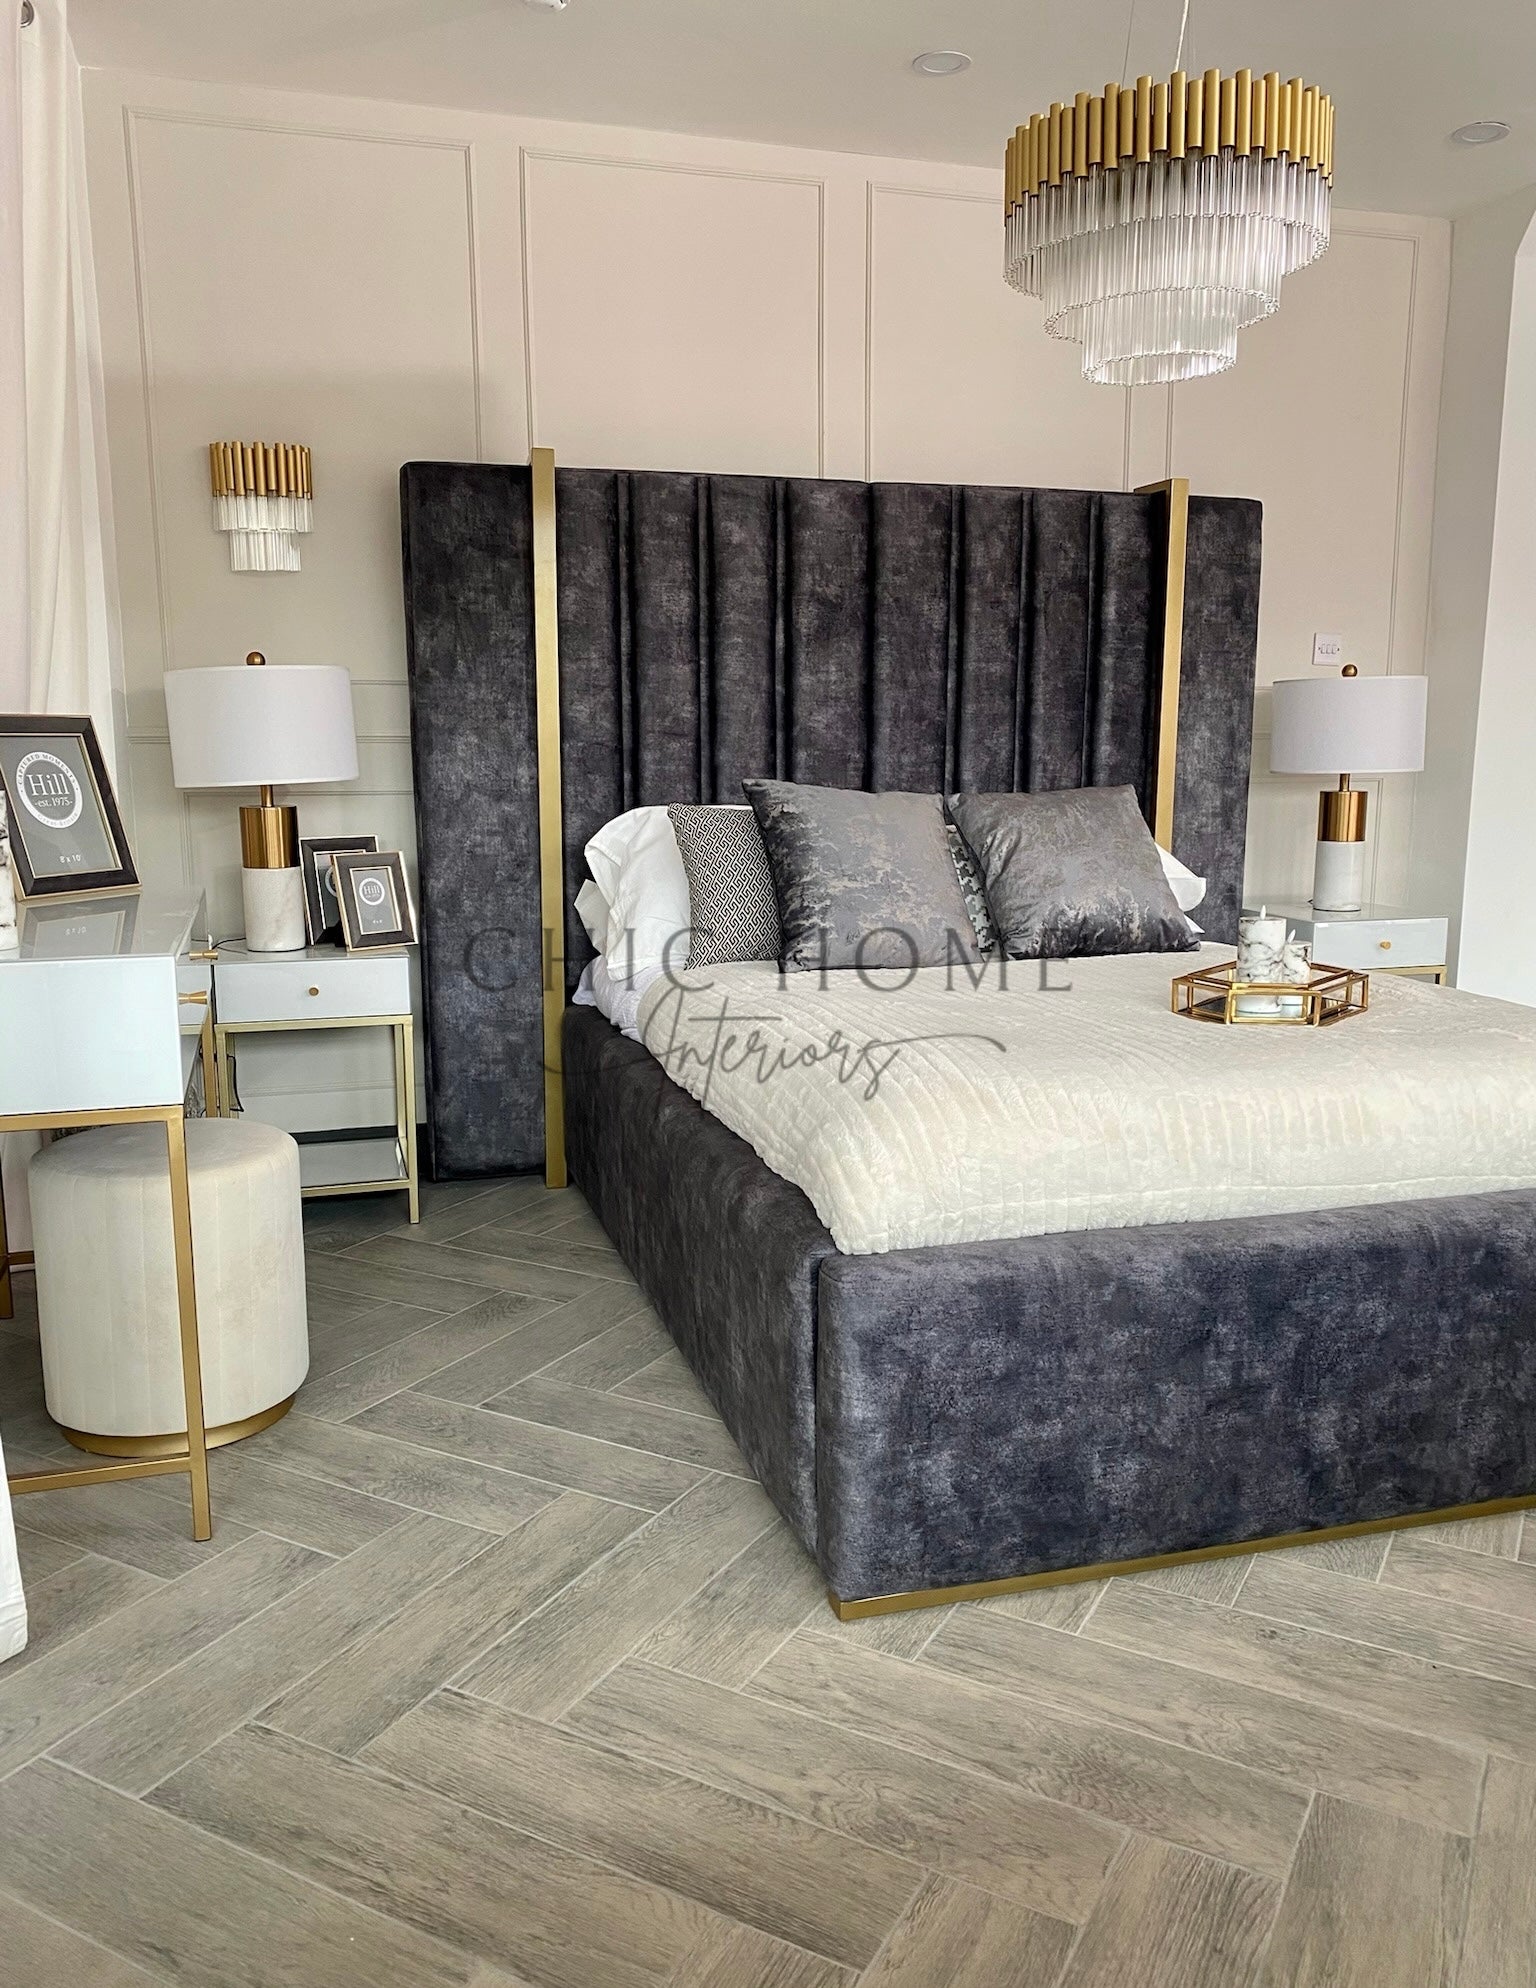 The Bespoke Royal Kensington Bed